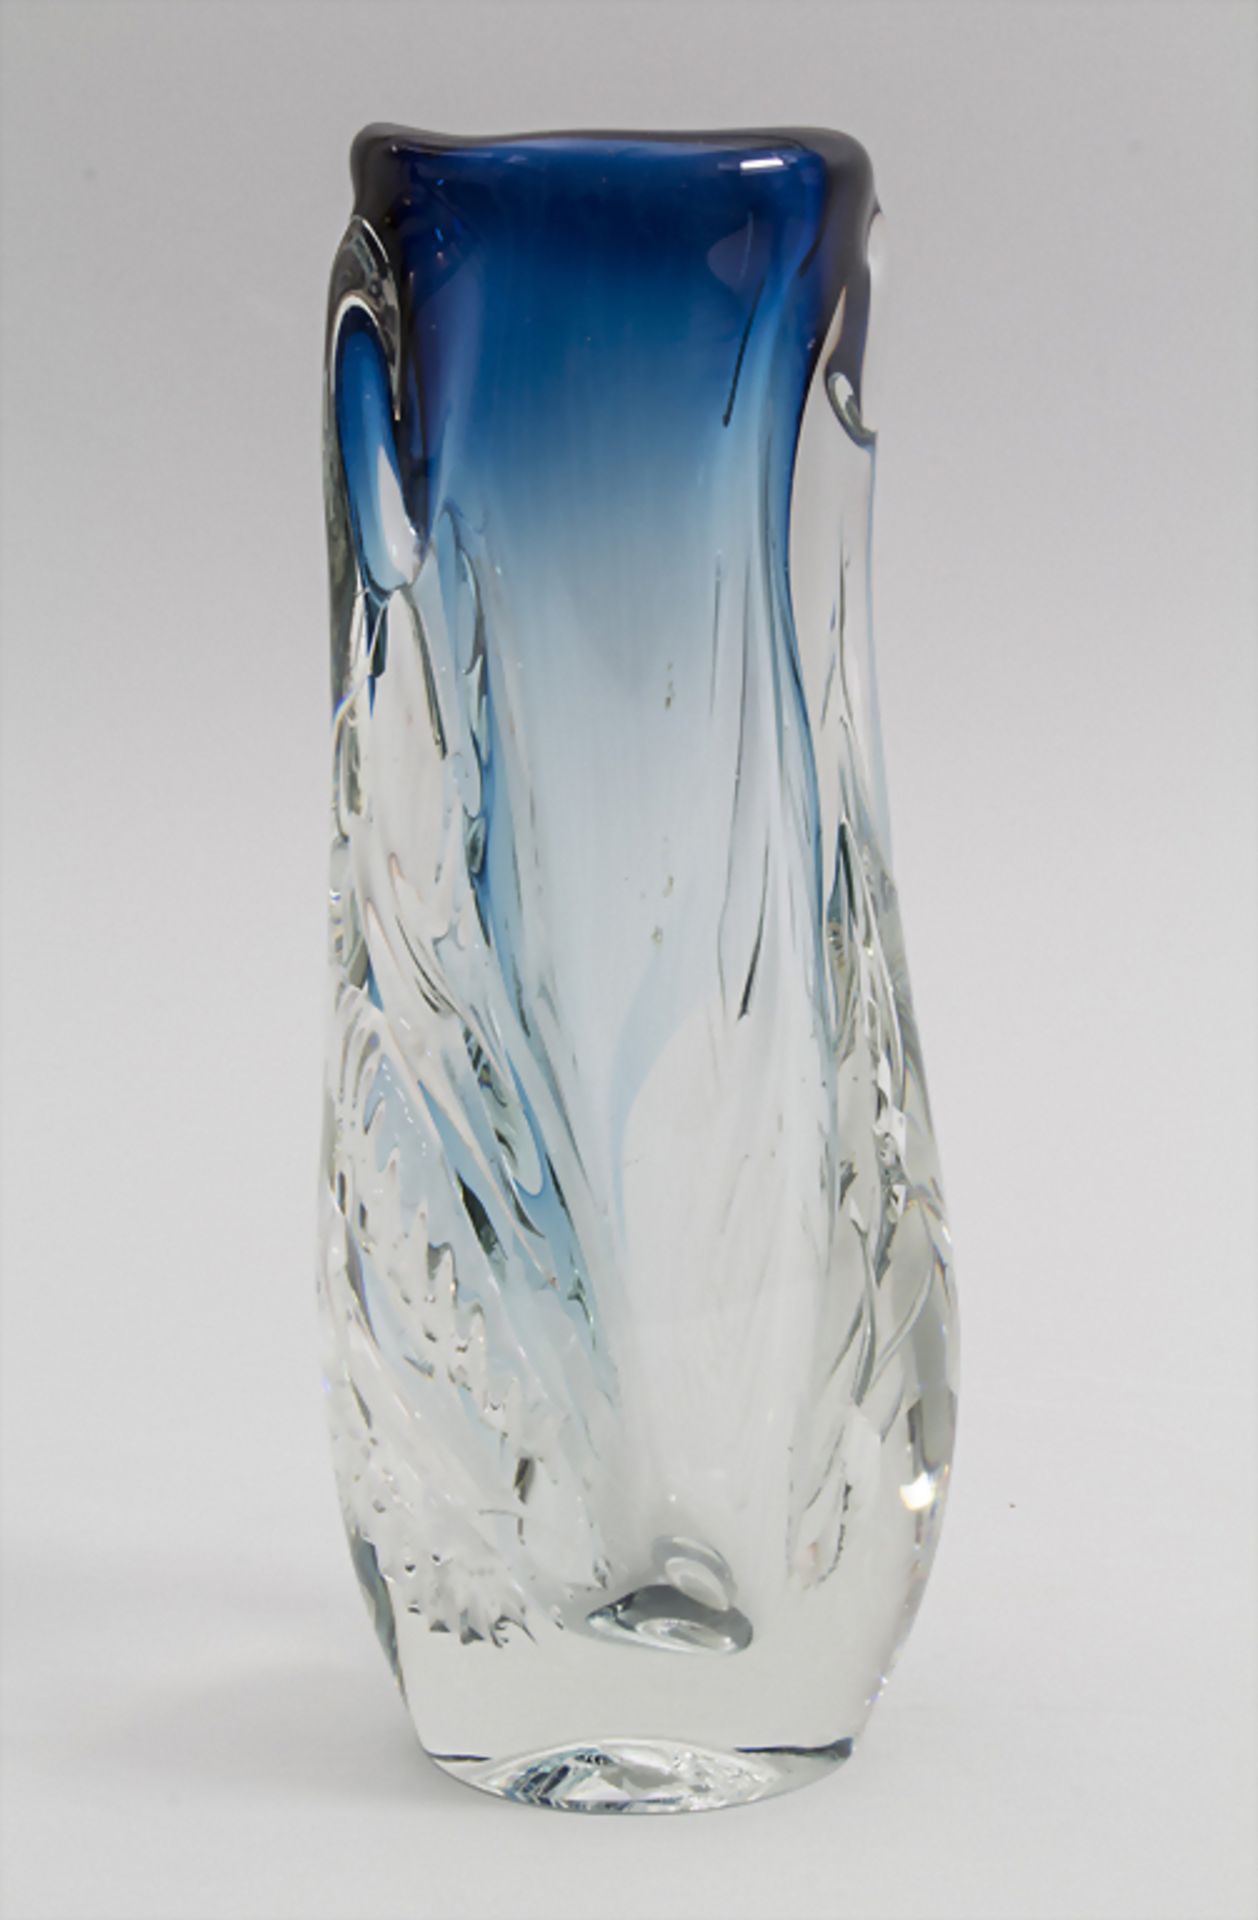 Ziervase / A decorative vase, Graal Glashütte, Dürnau, Entw. Prof. Konrad Habermeier, 70er